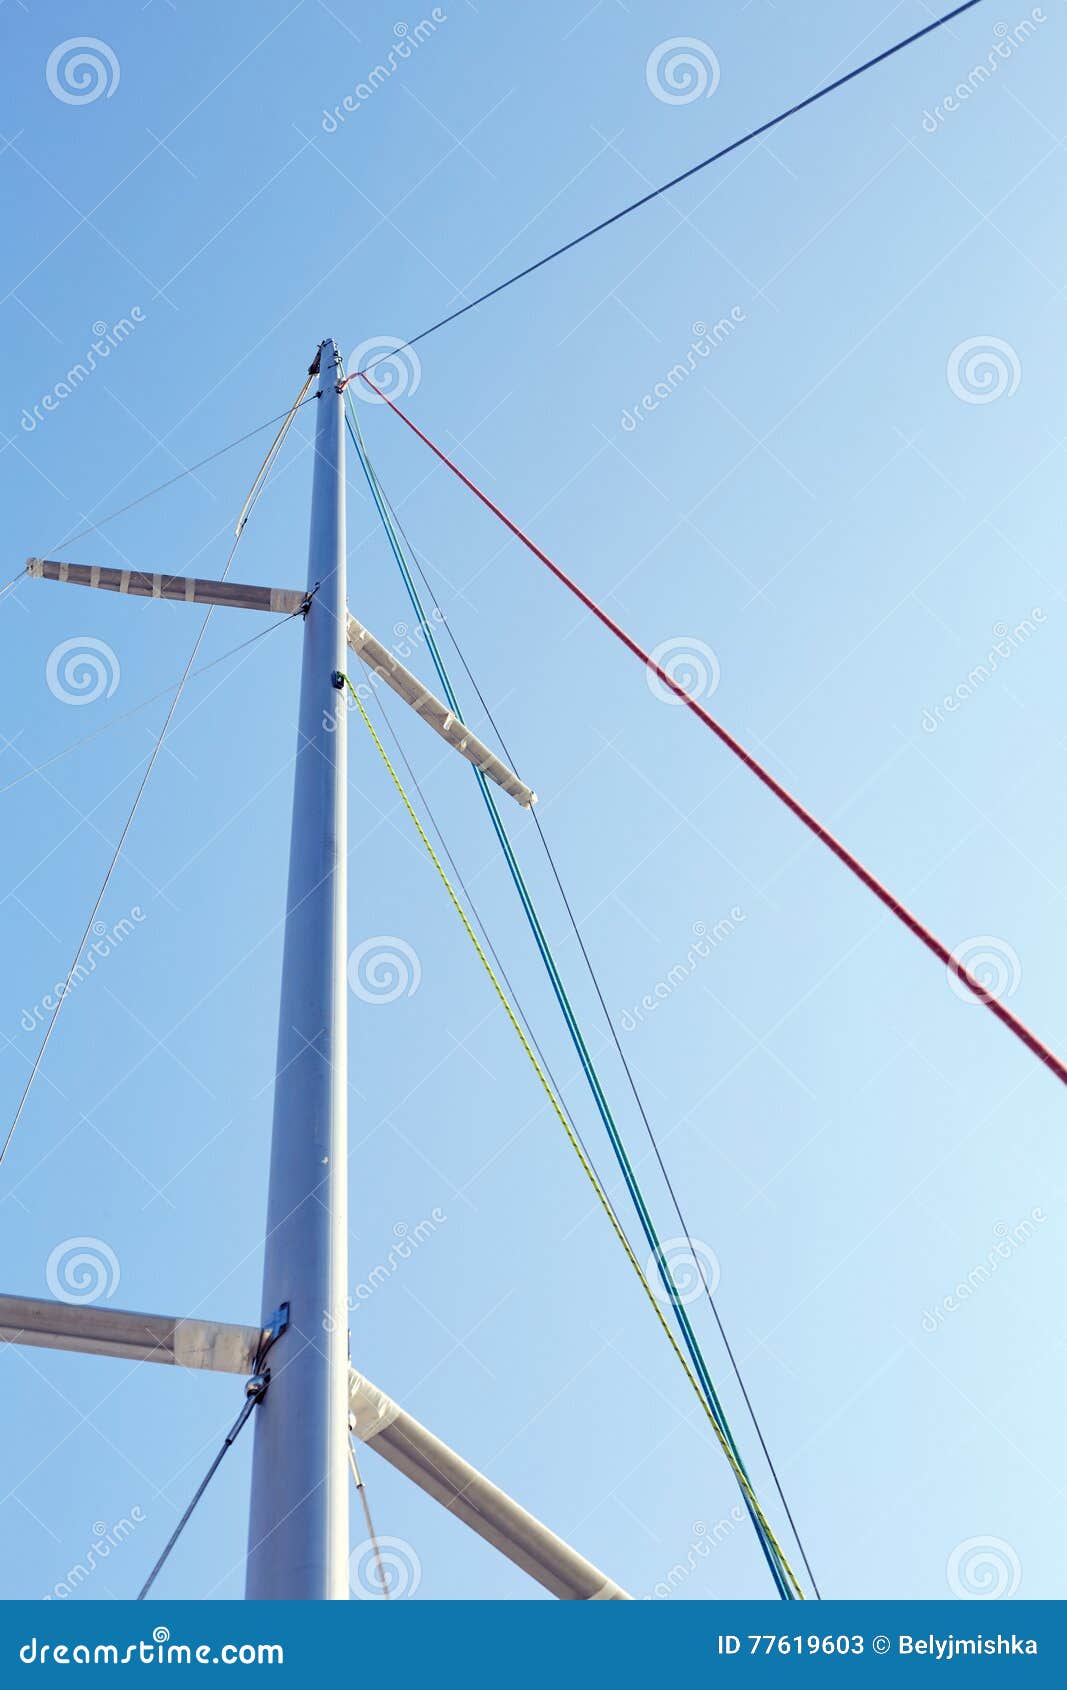 staysail halyard on the mast